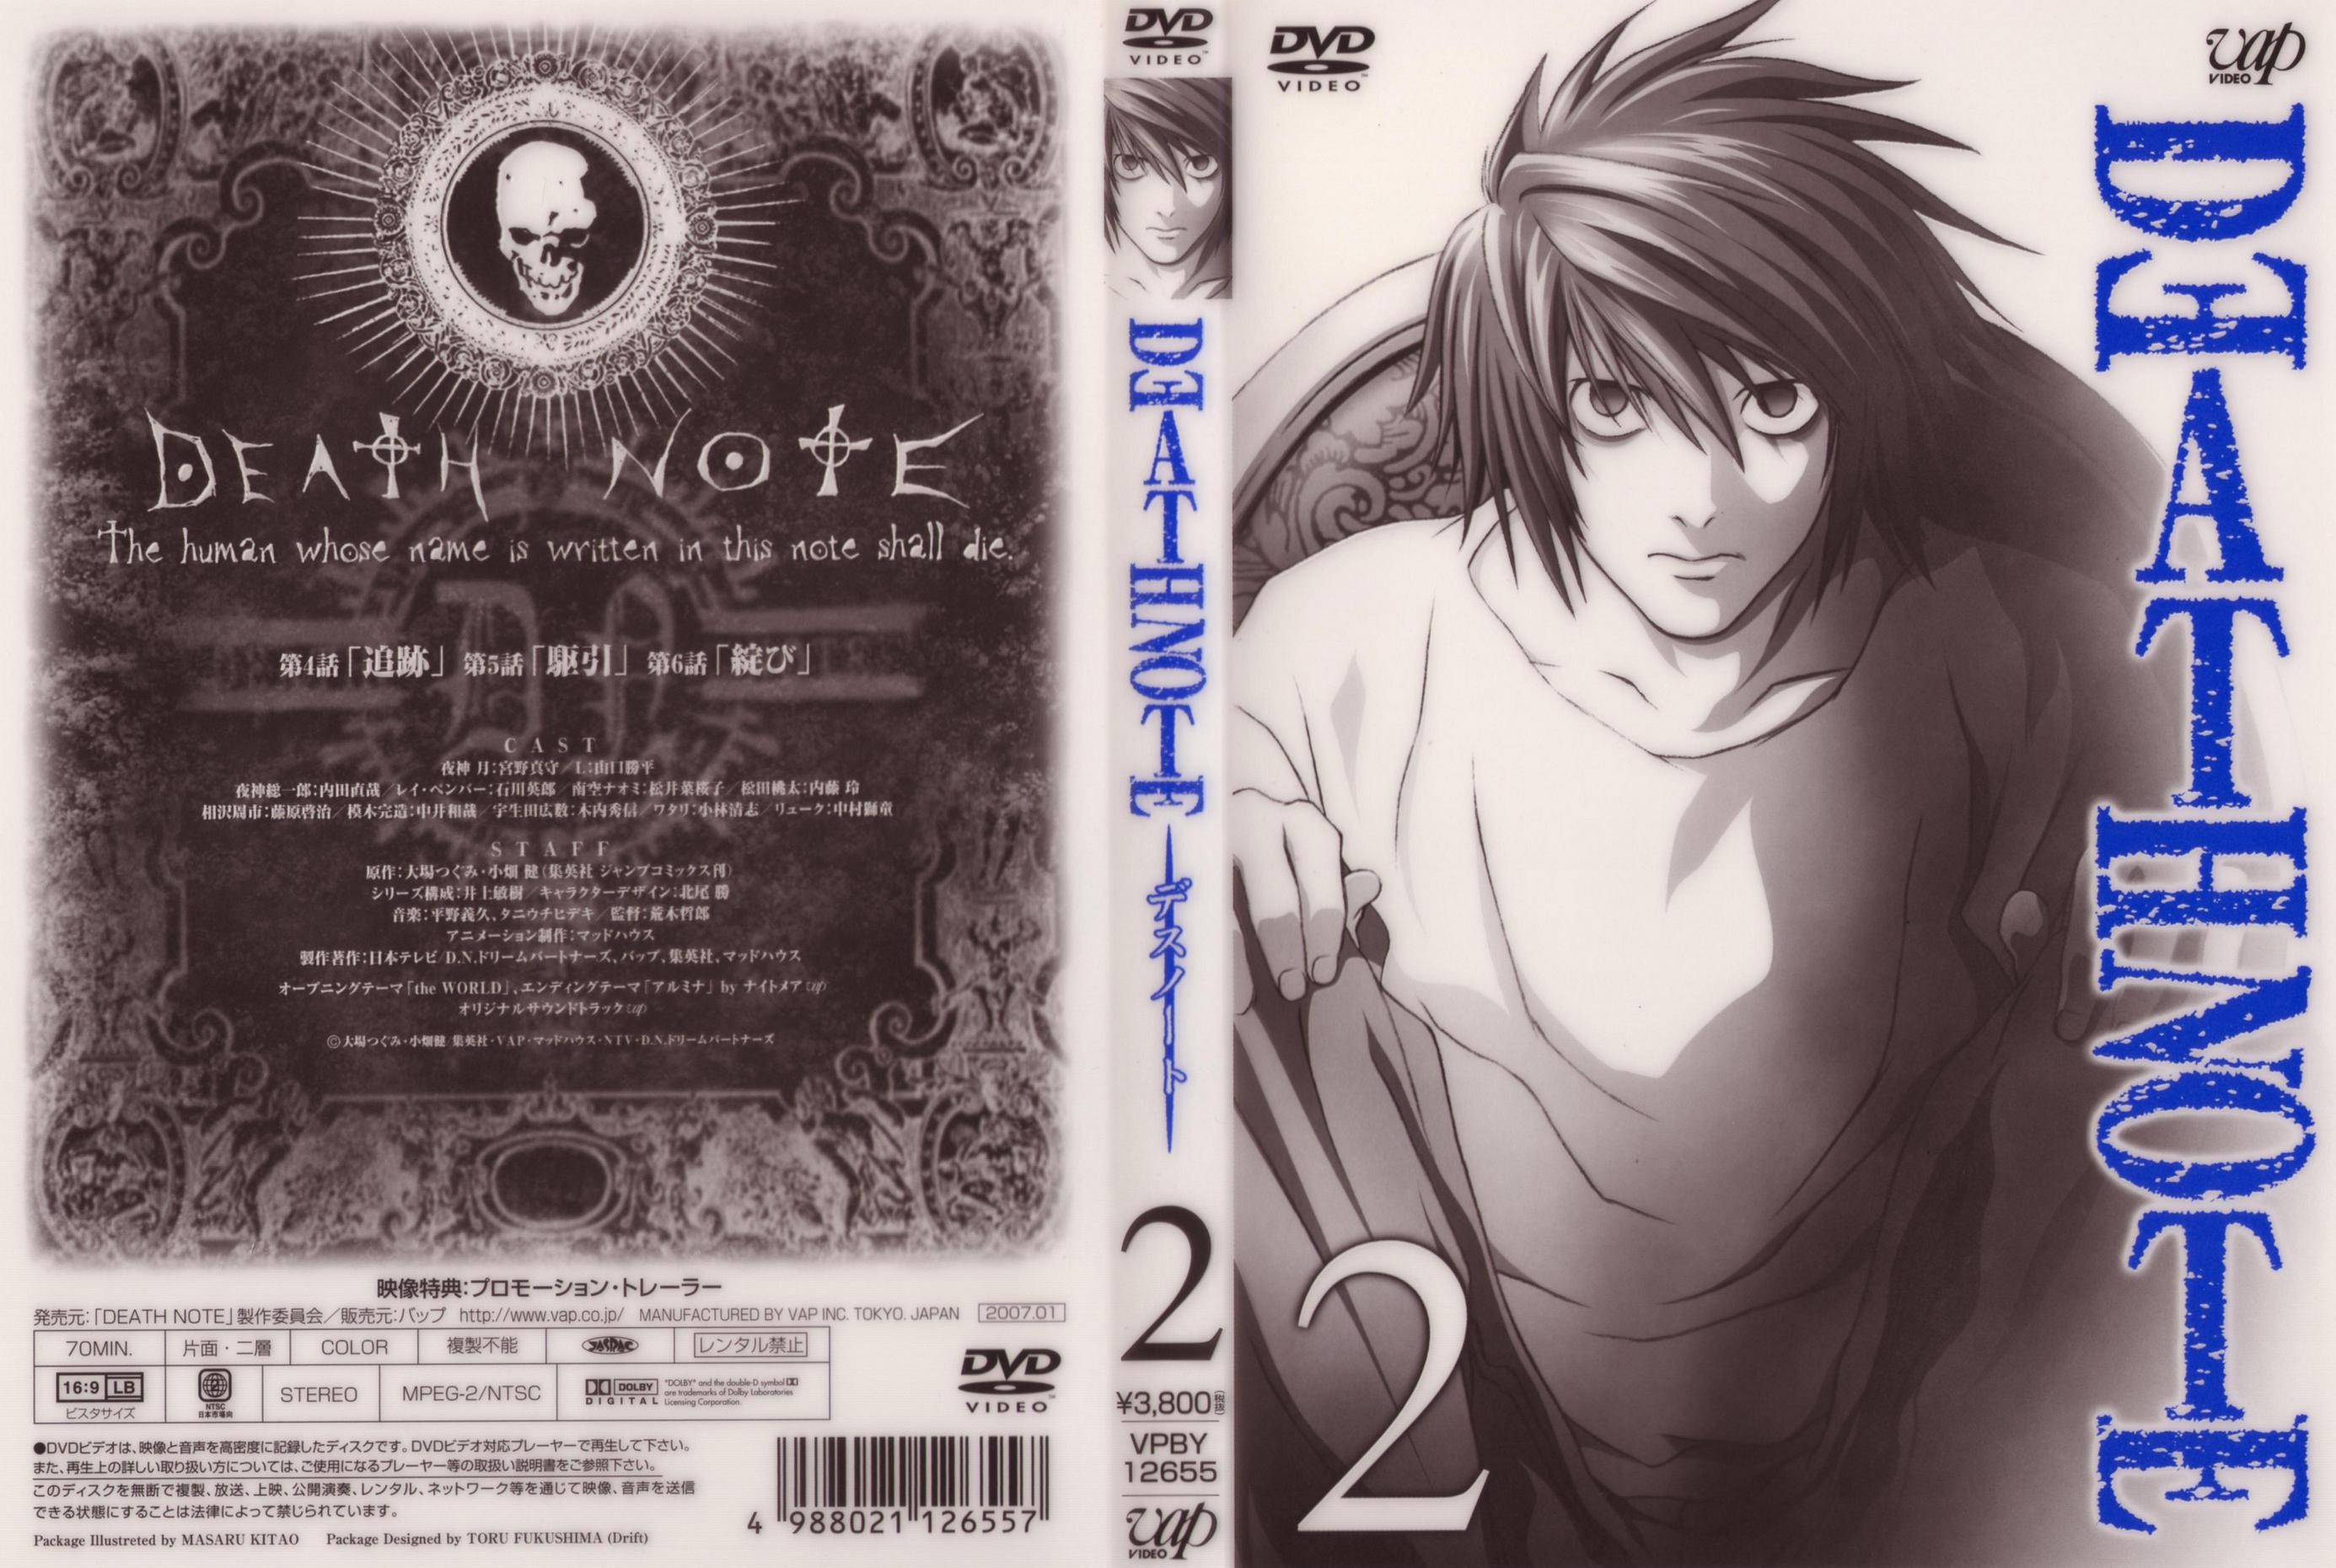 Jaquette DVD Death Note vol 2